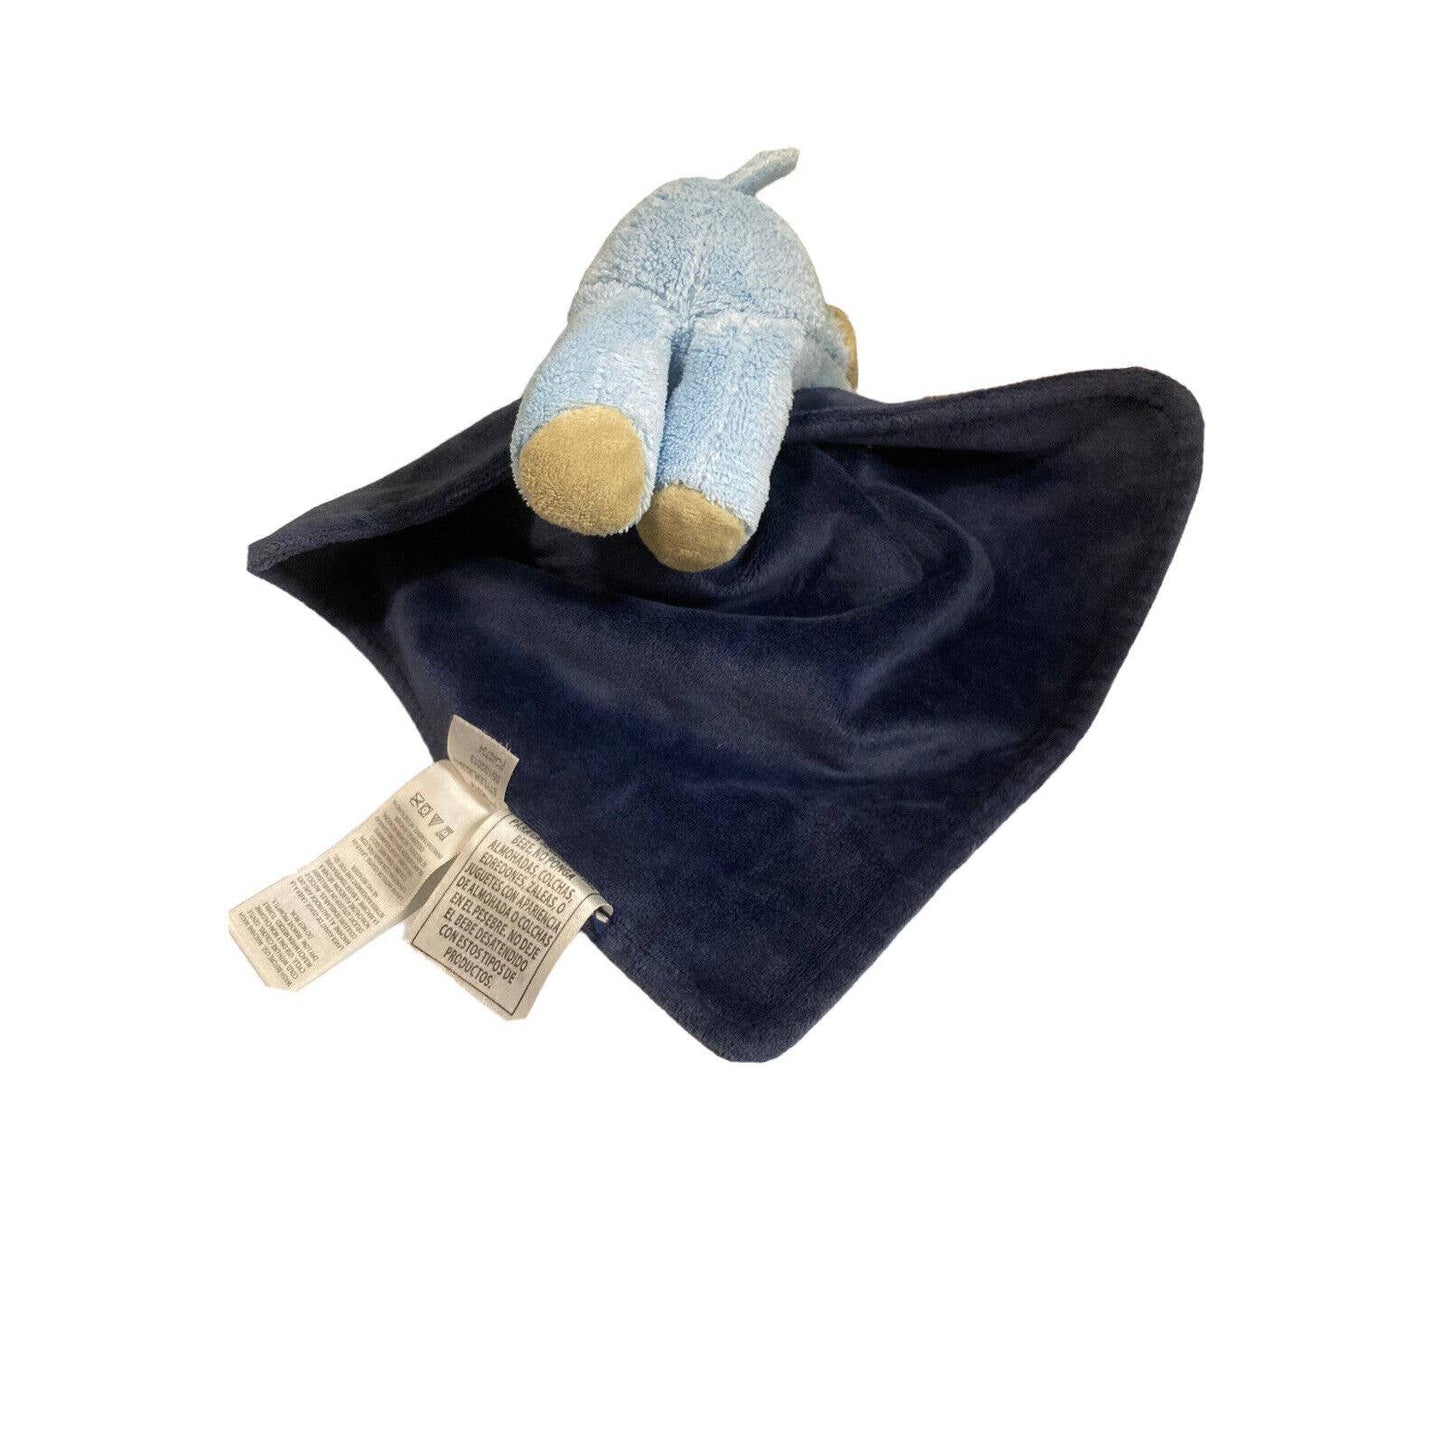 Carters Security Blanket Lovey Plush Blue Elephant Rattle Navy Blue Blanket